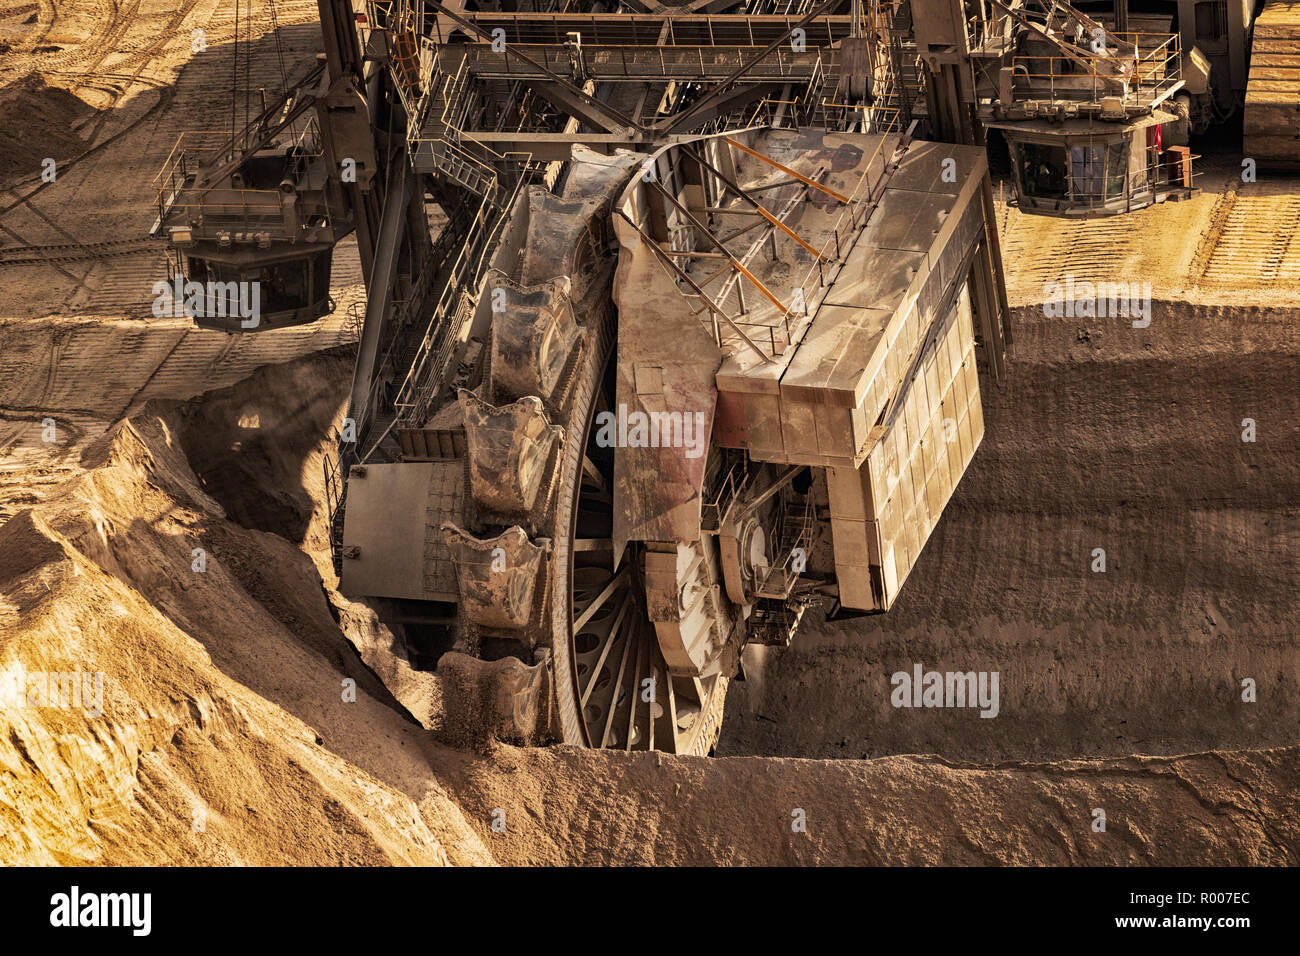 Huge bucket wheel excavator mining for brown coal in an open pit mine. Stock Photo